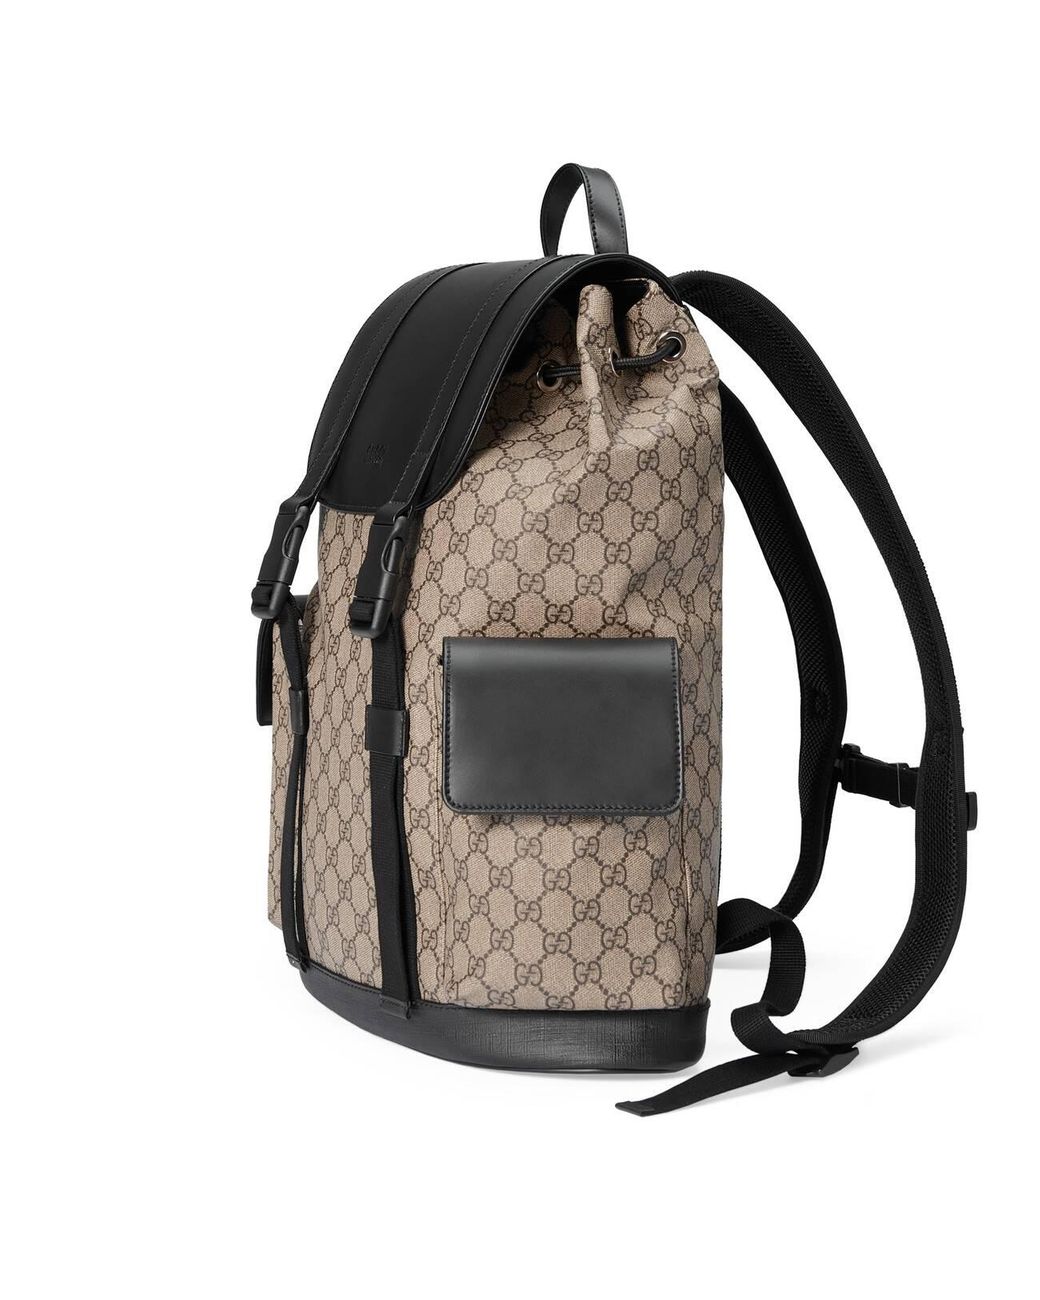 Gucci Gg Supreme Backpack Shop Prices, Save 65% | jlcatj.gob.mx